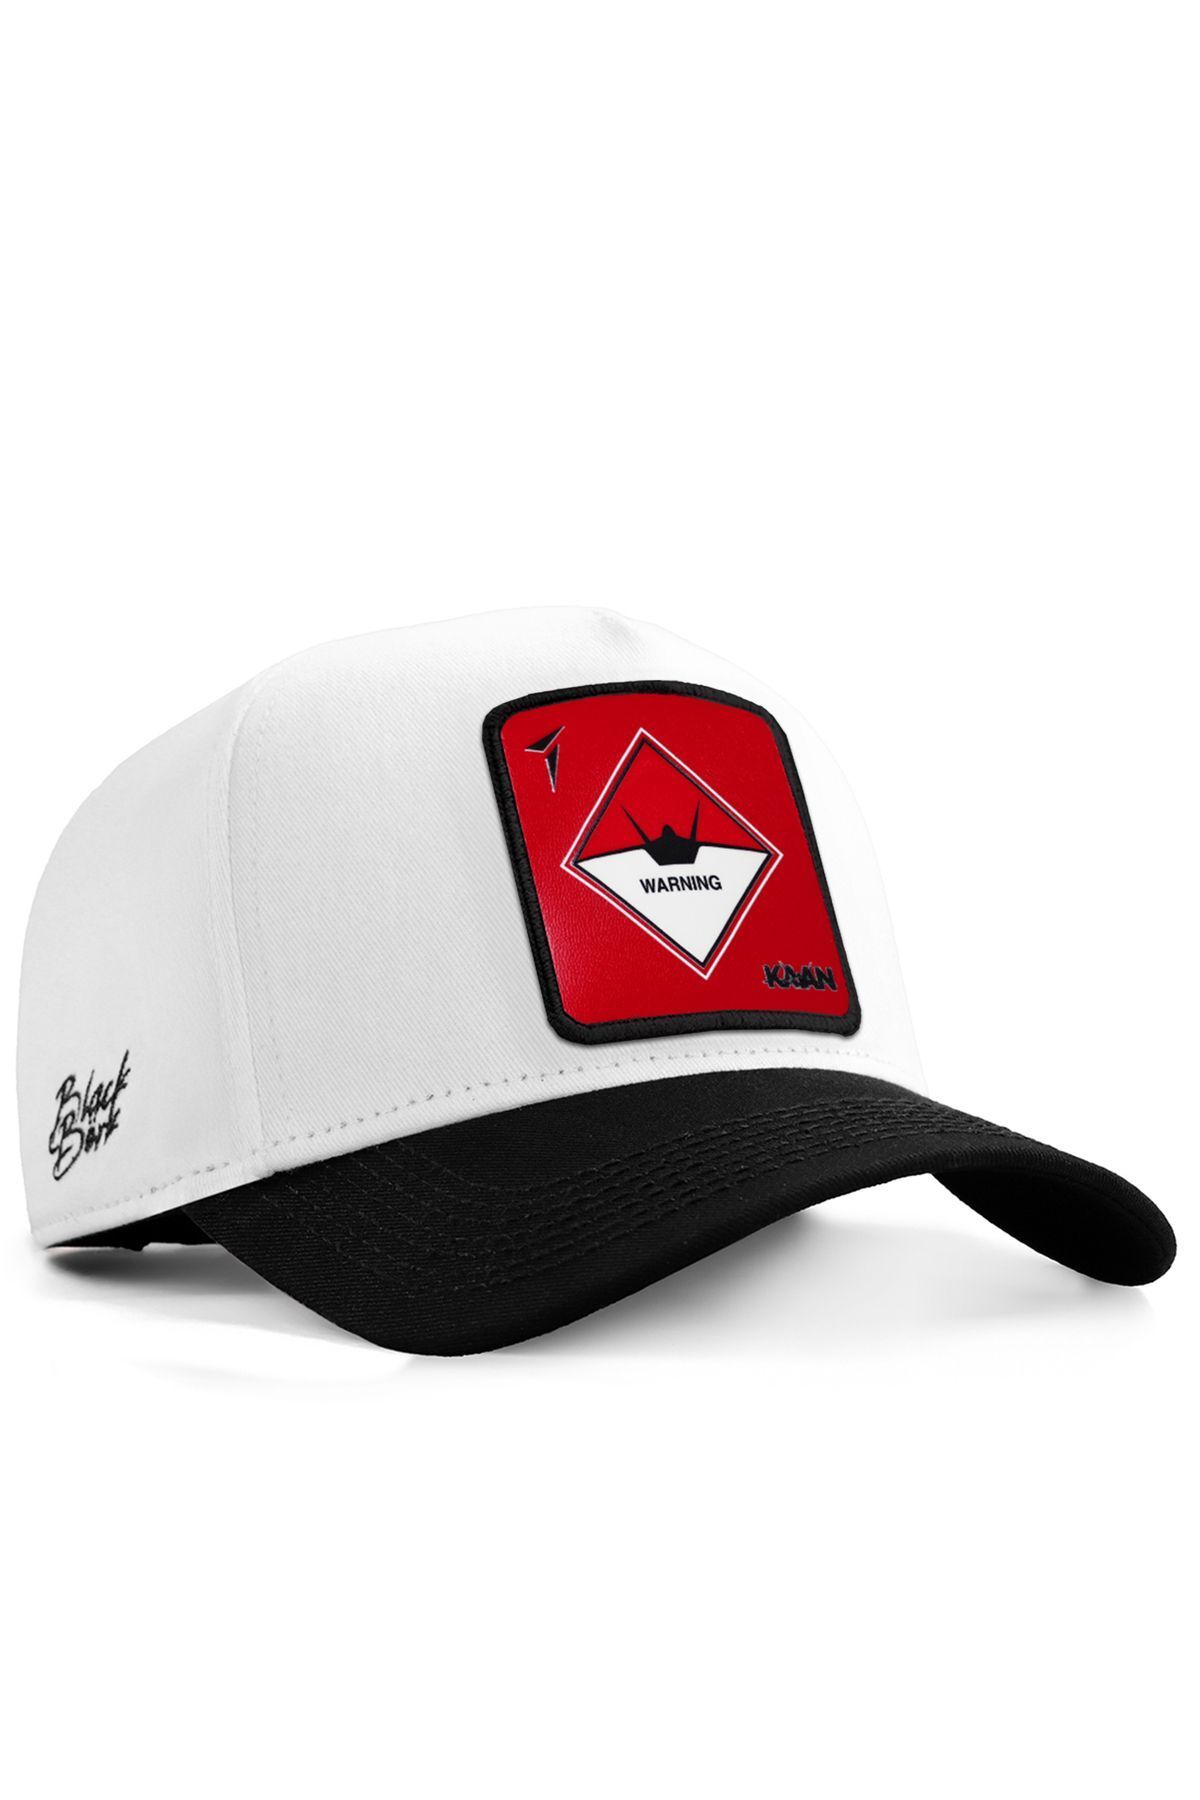 BlackBörk V1 Baseball Dikkat Kaan Lisanlı Beyaz-siyah Siperli Şapka